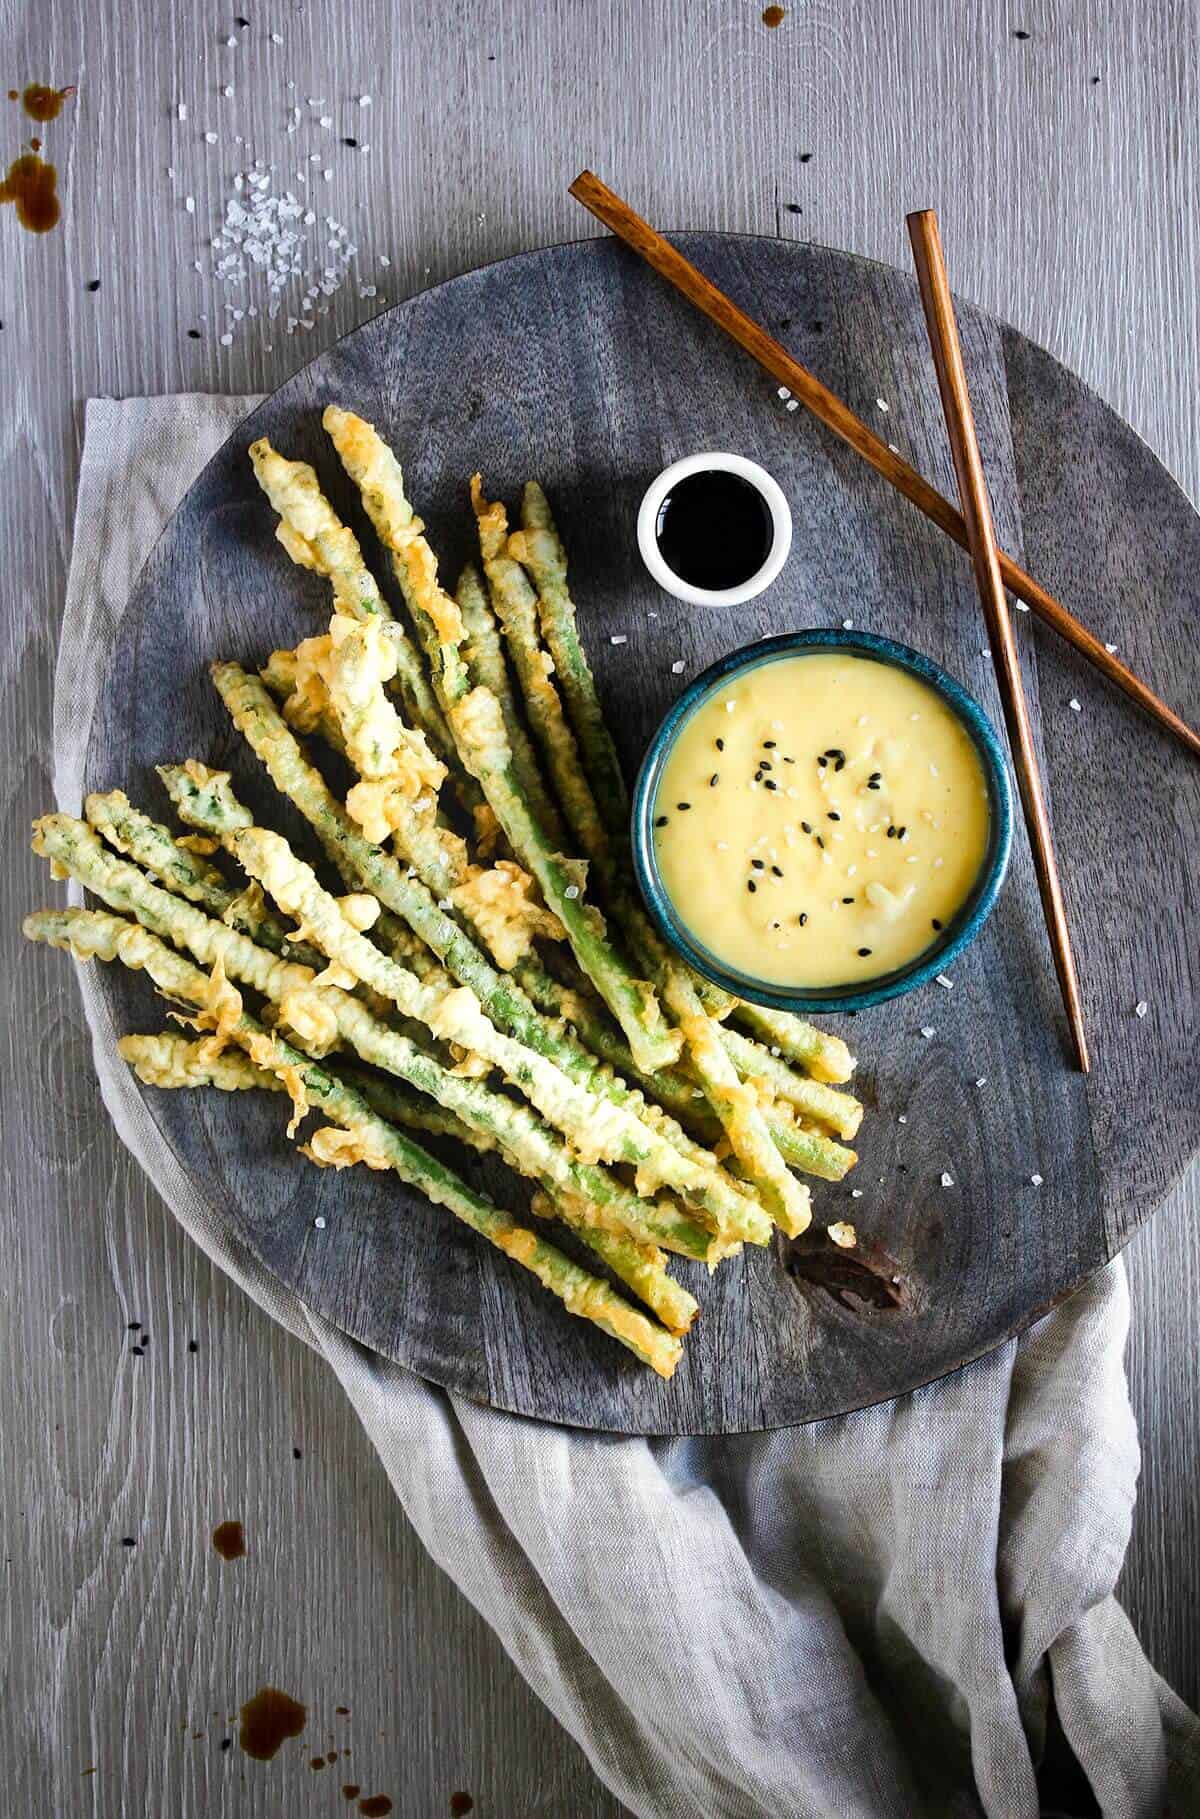 Asparagus tempura on a tray with bowl of miso aioli, soy sauce, and chop sticks.